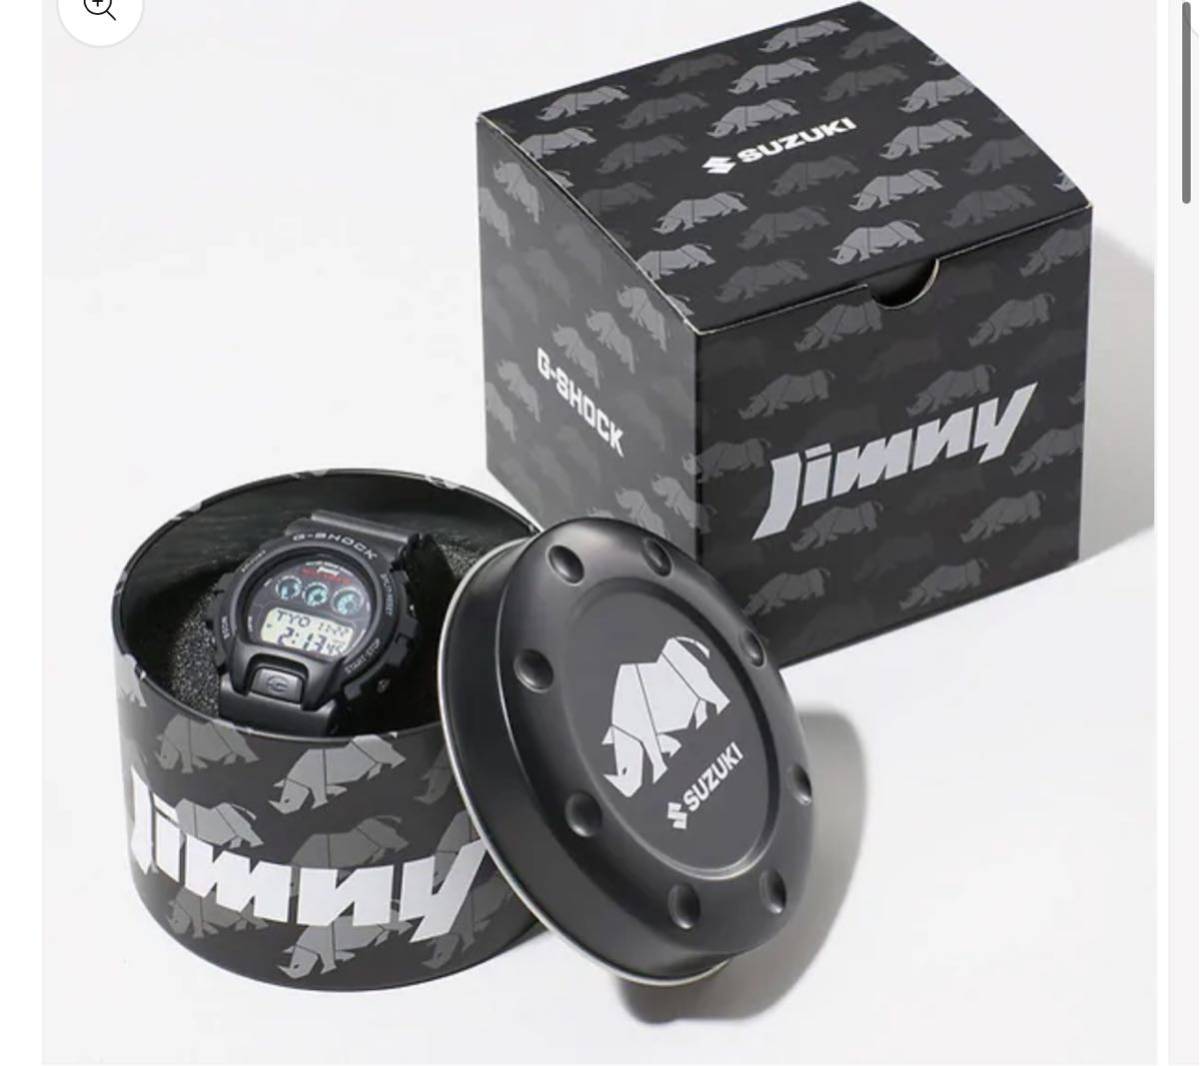 SUZUKI JIMNY CASIO G-SHOCK GW-6900 コラボウォッチ セカンドエディション ジムニー スズキ 腕時計 新品未開封_画像6